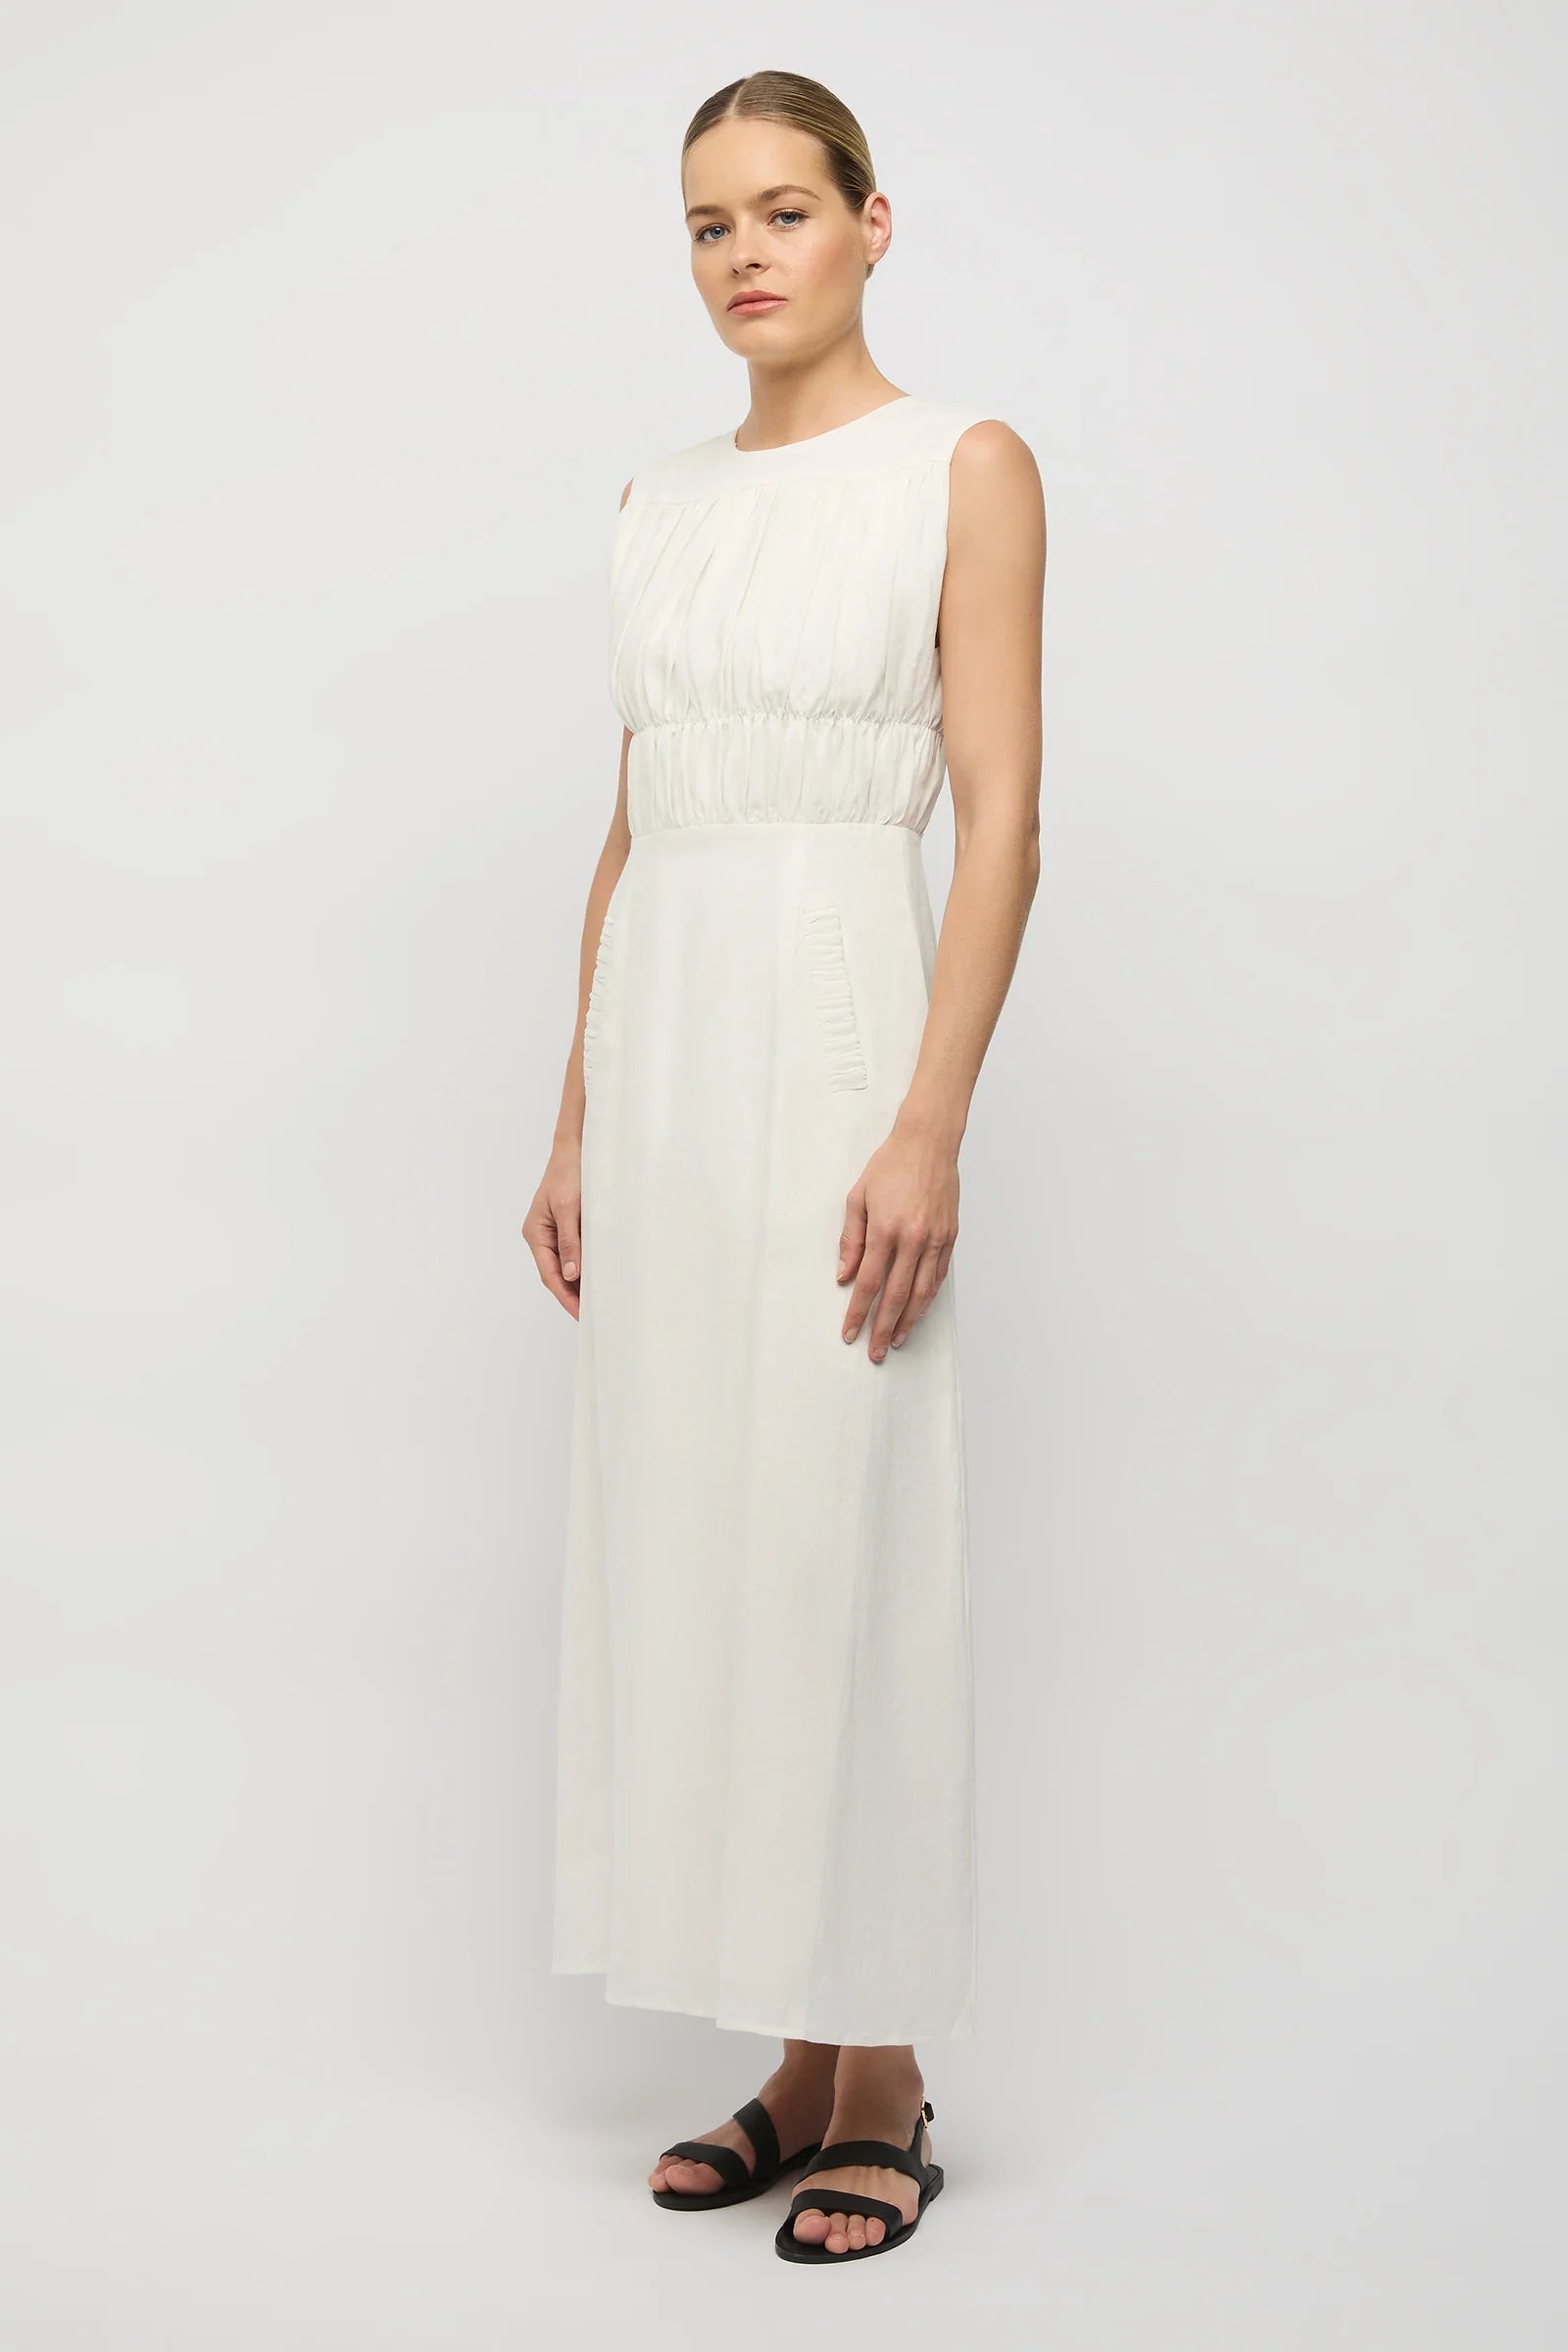 Lilibert Linen Dress in White